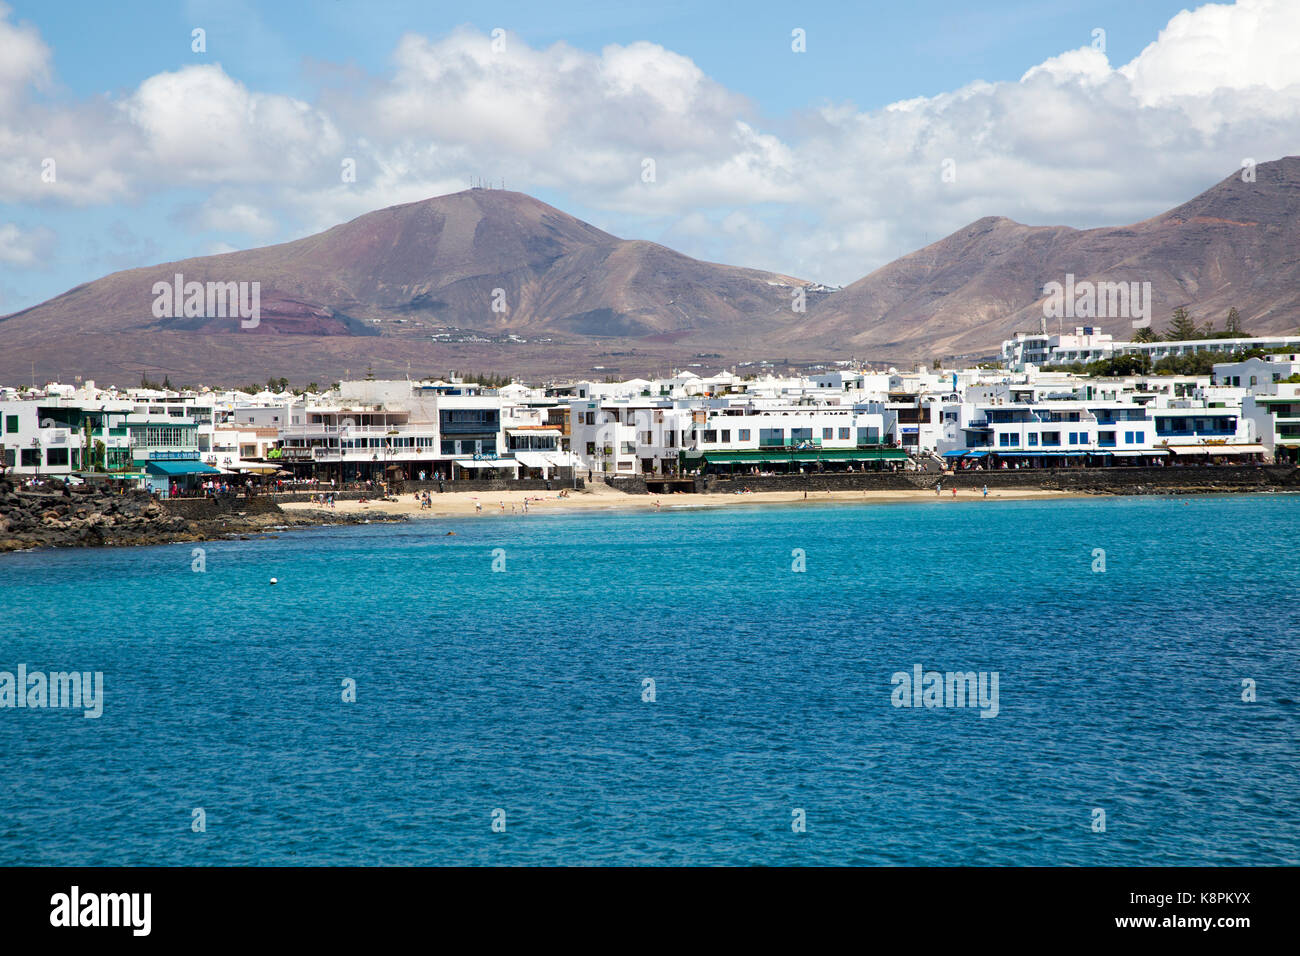 Sandy beach and buildings in Playa Blanca, Lanzarote, Canary Islands, Spain Stock Photo